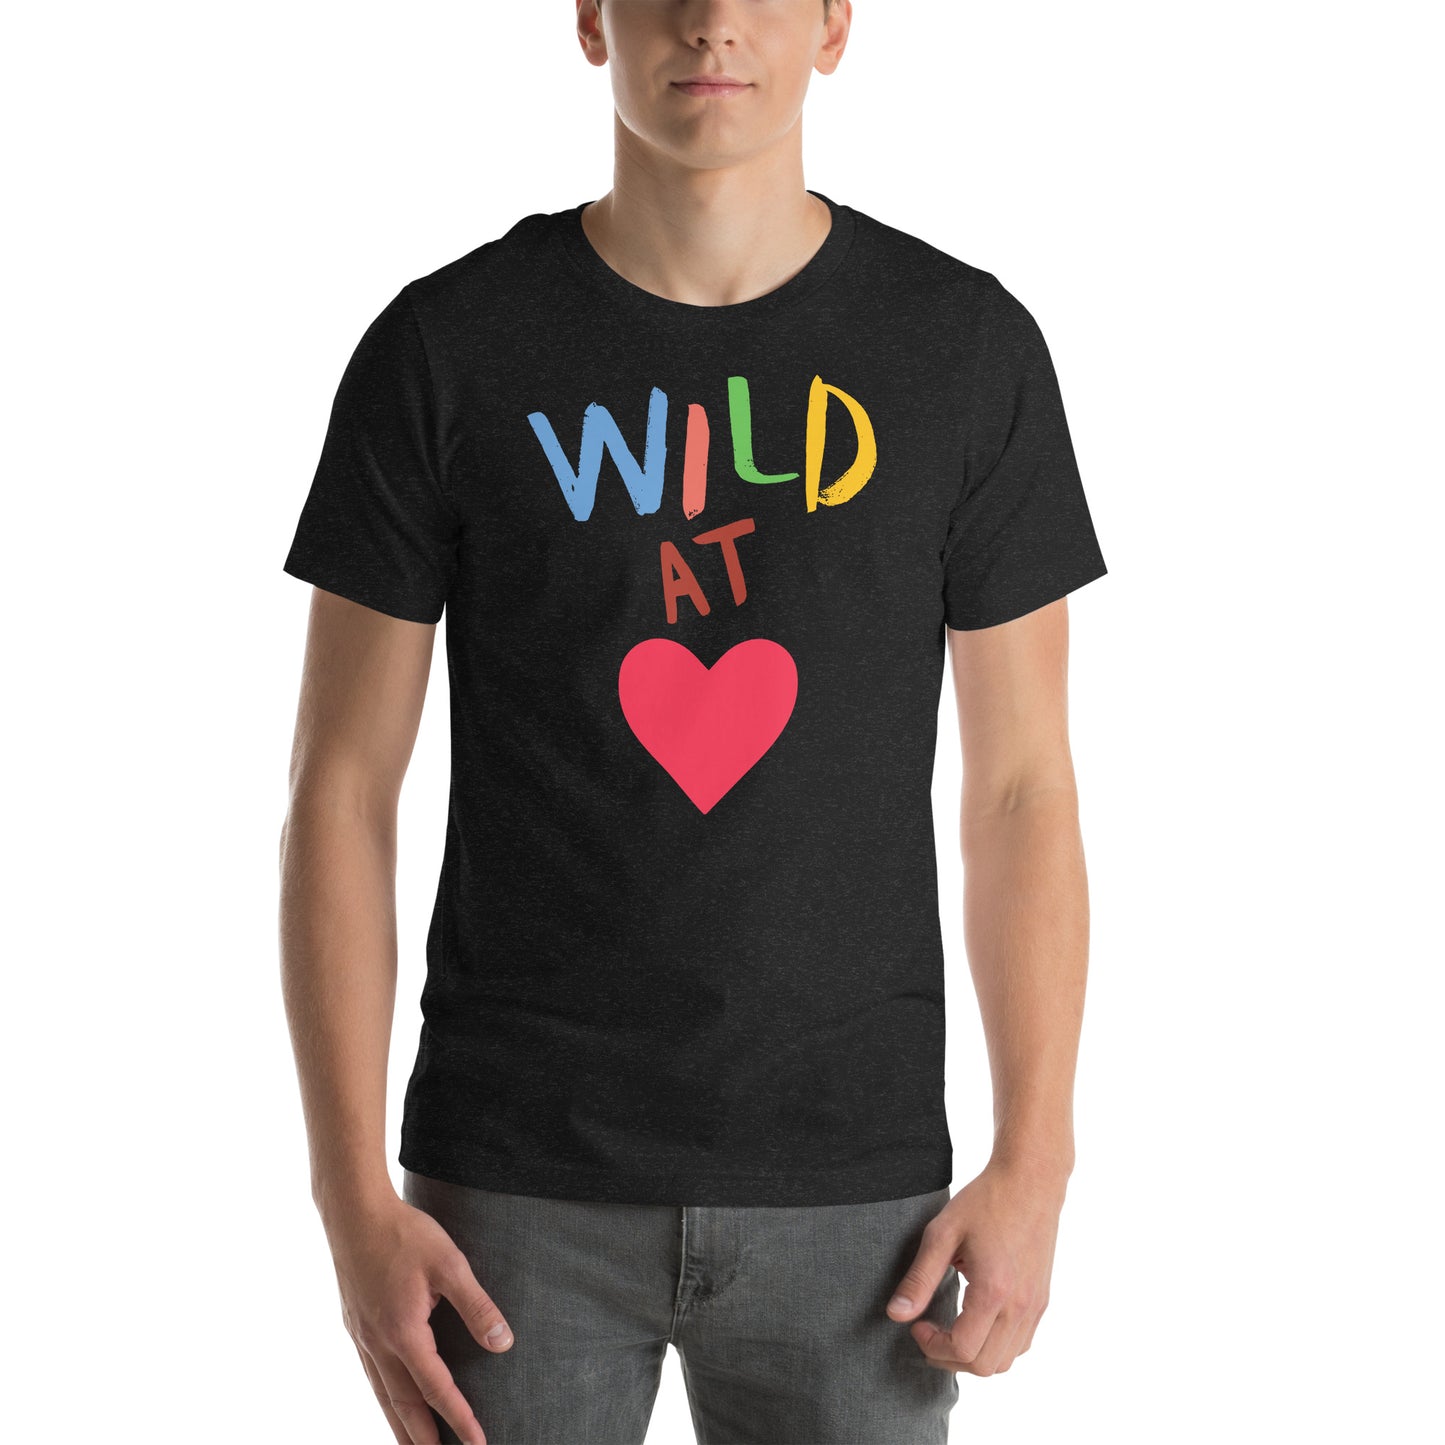 Wild at Heart T-shirt